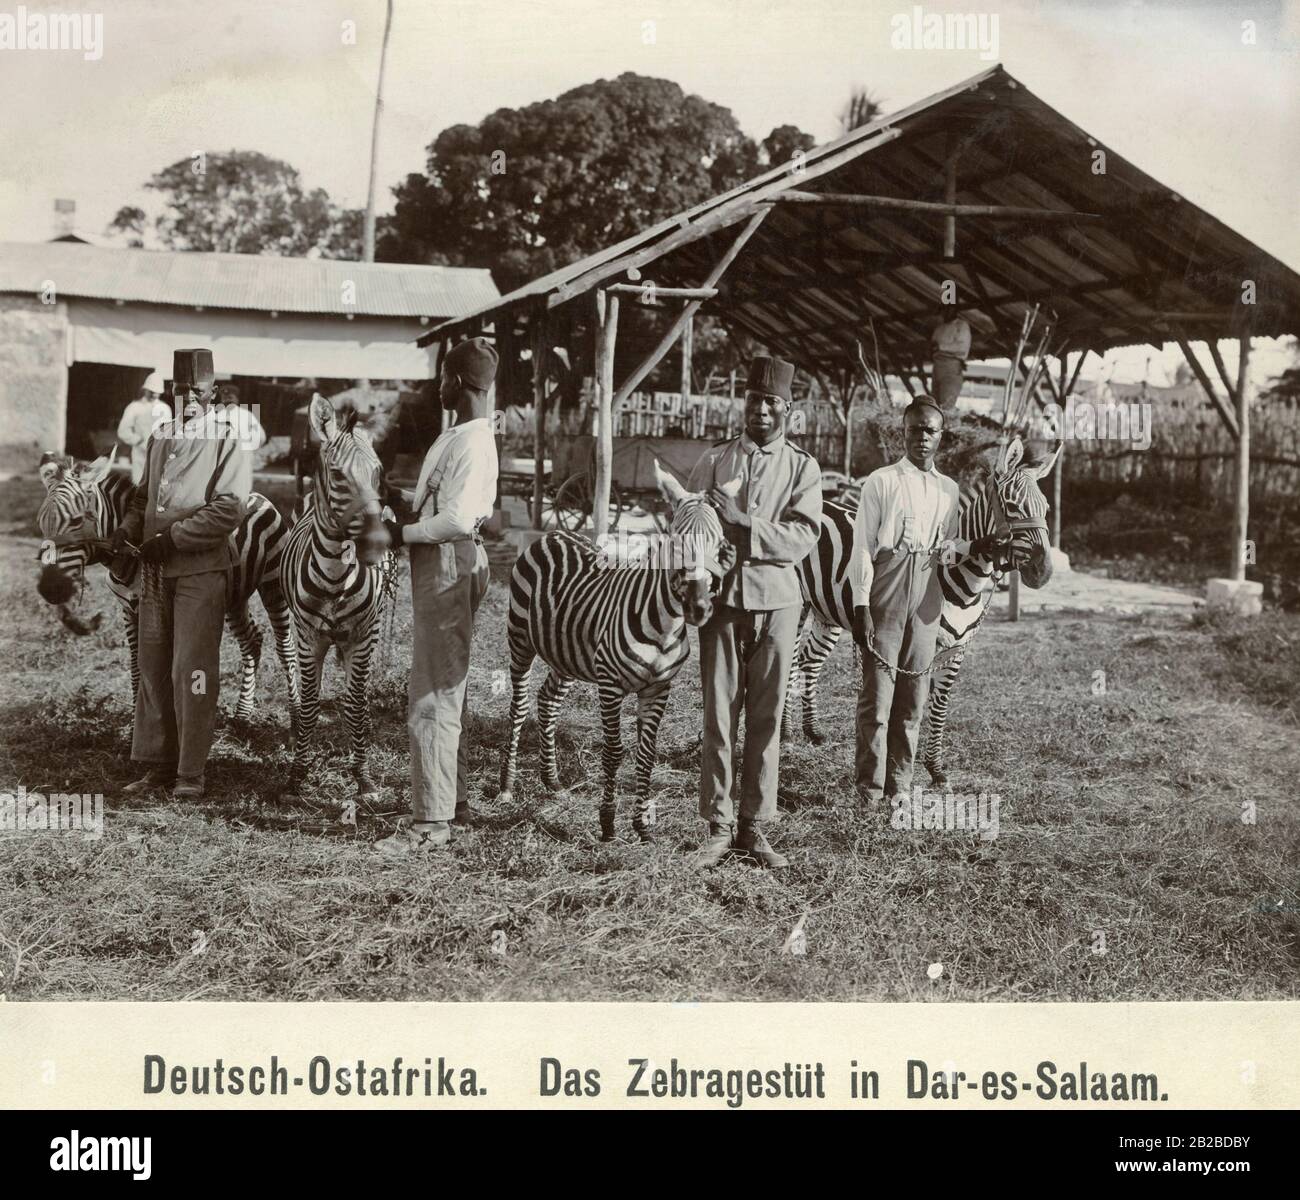 The zebra stud in Dar es Salaam in the German colony East Africa. Stock Photo